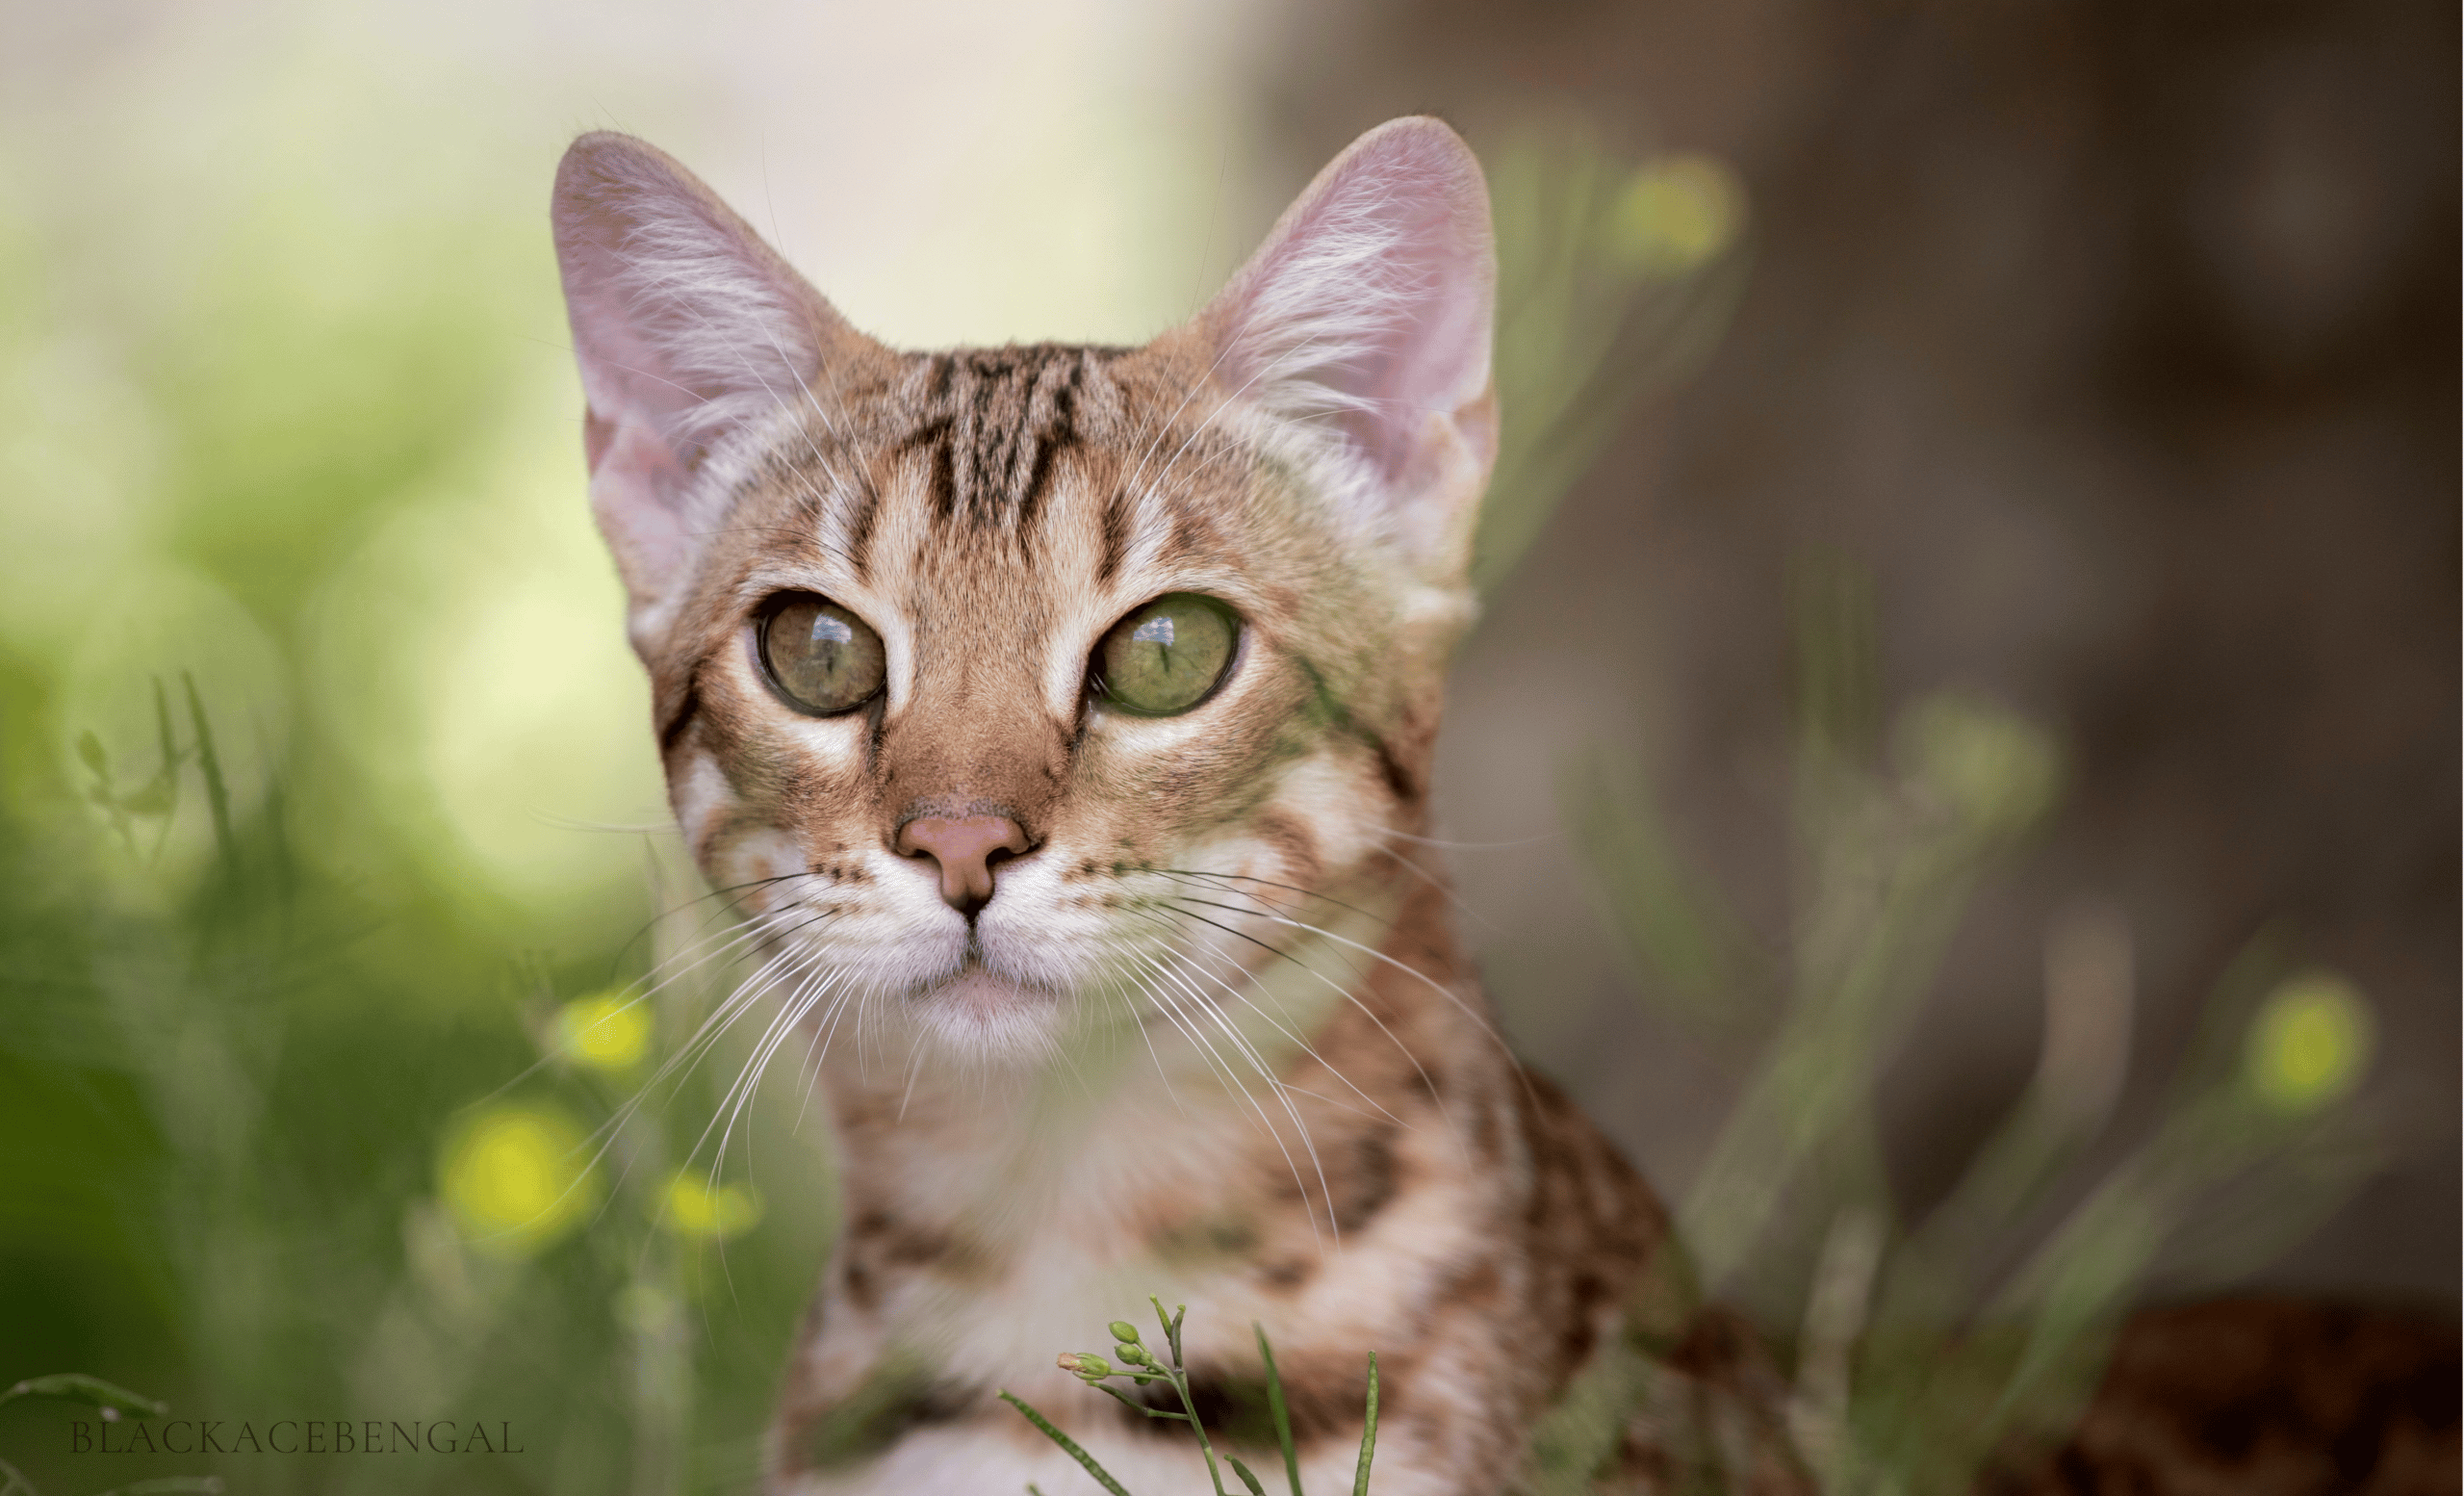 World's Top 12 Priciest Cat Breeds: Spotlight on Ashera and Savannah